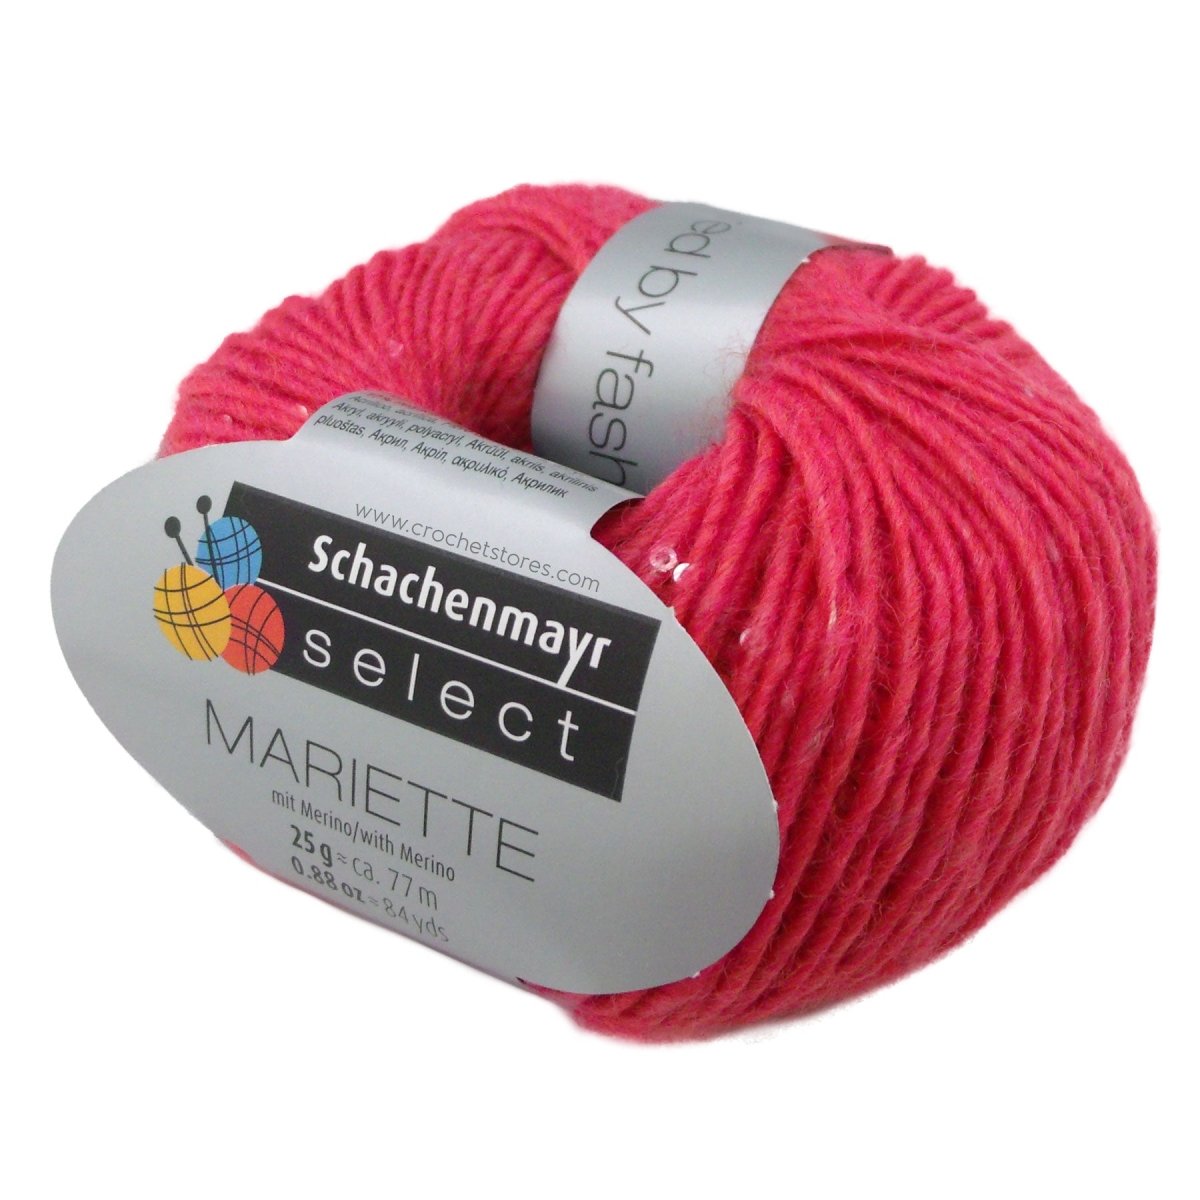 MARIETTE - Crochetstores9811781-81014053859050067